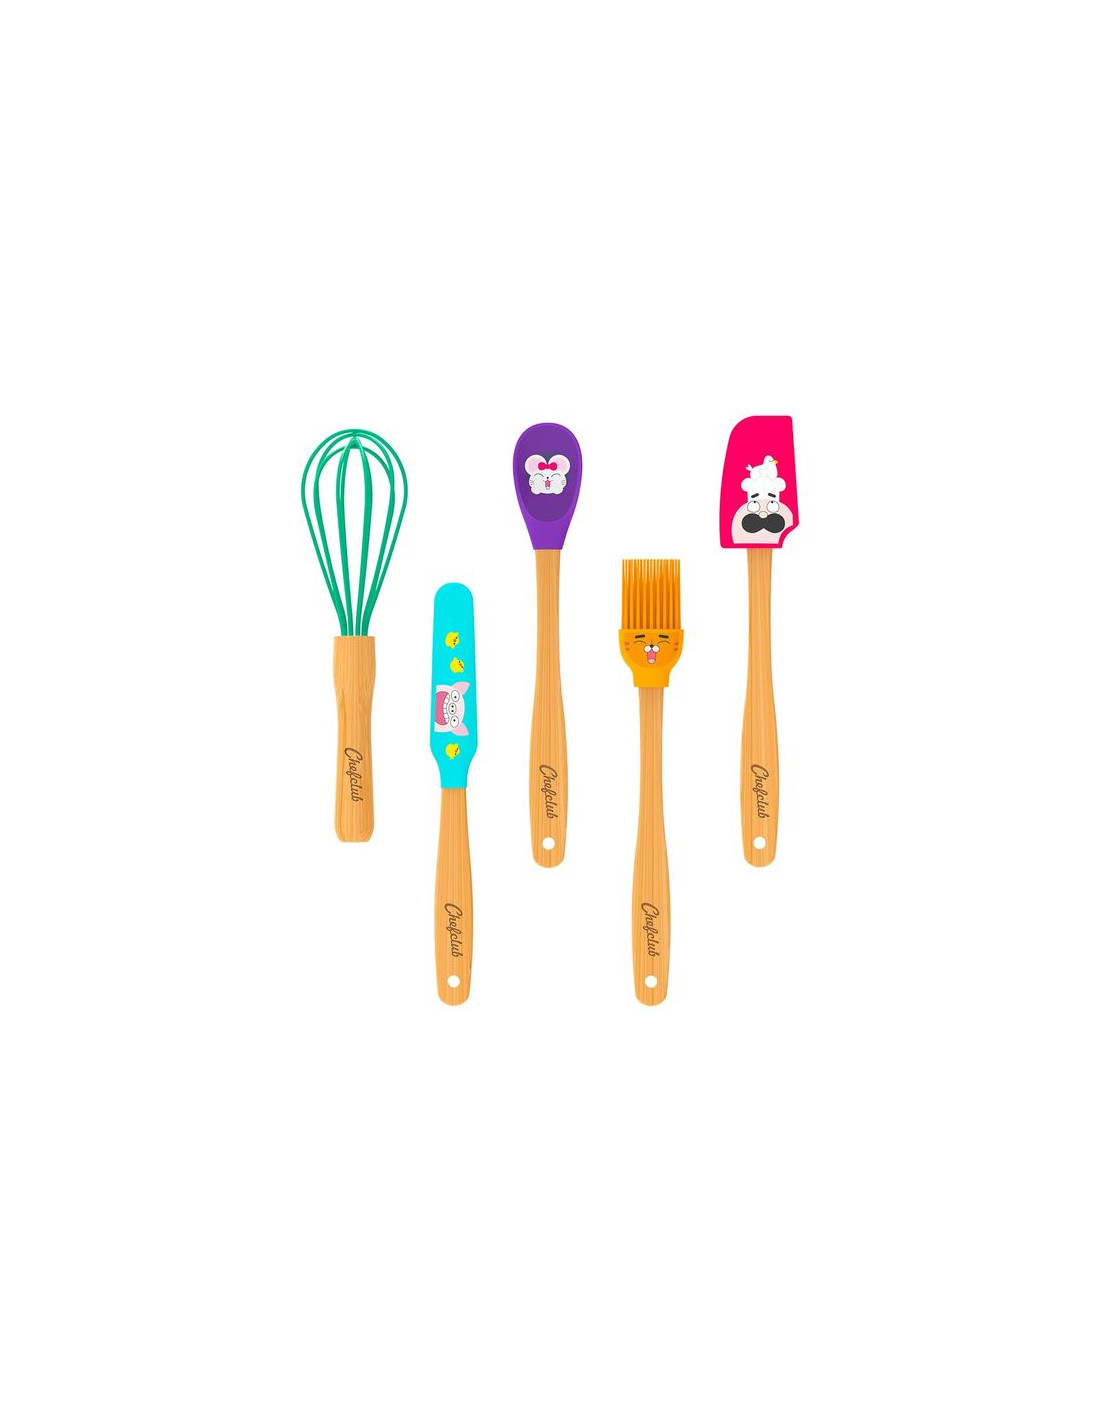 Kit de mini-ustensiles - Chefclub Kids - Atelier cuisine enfant